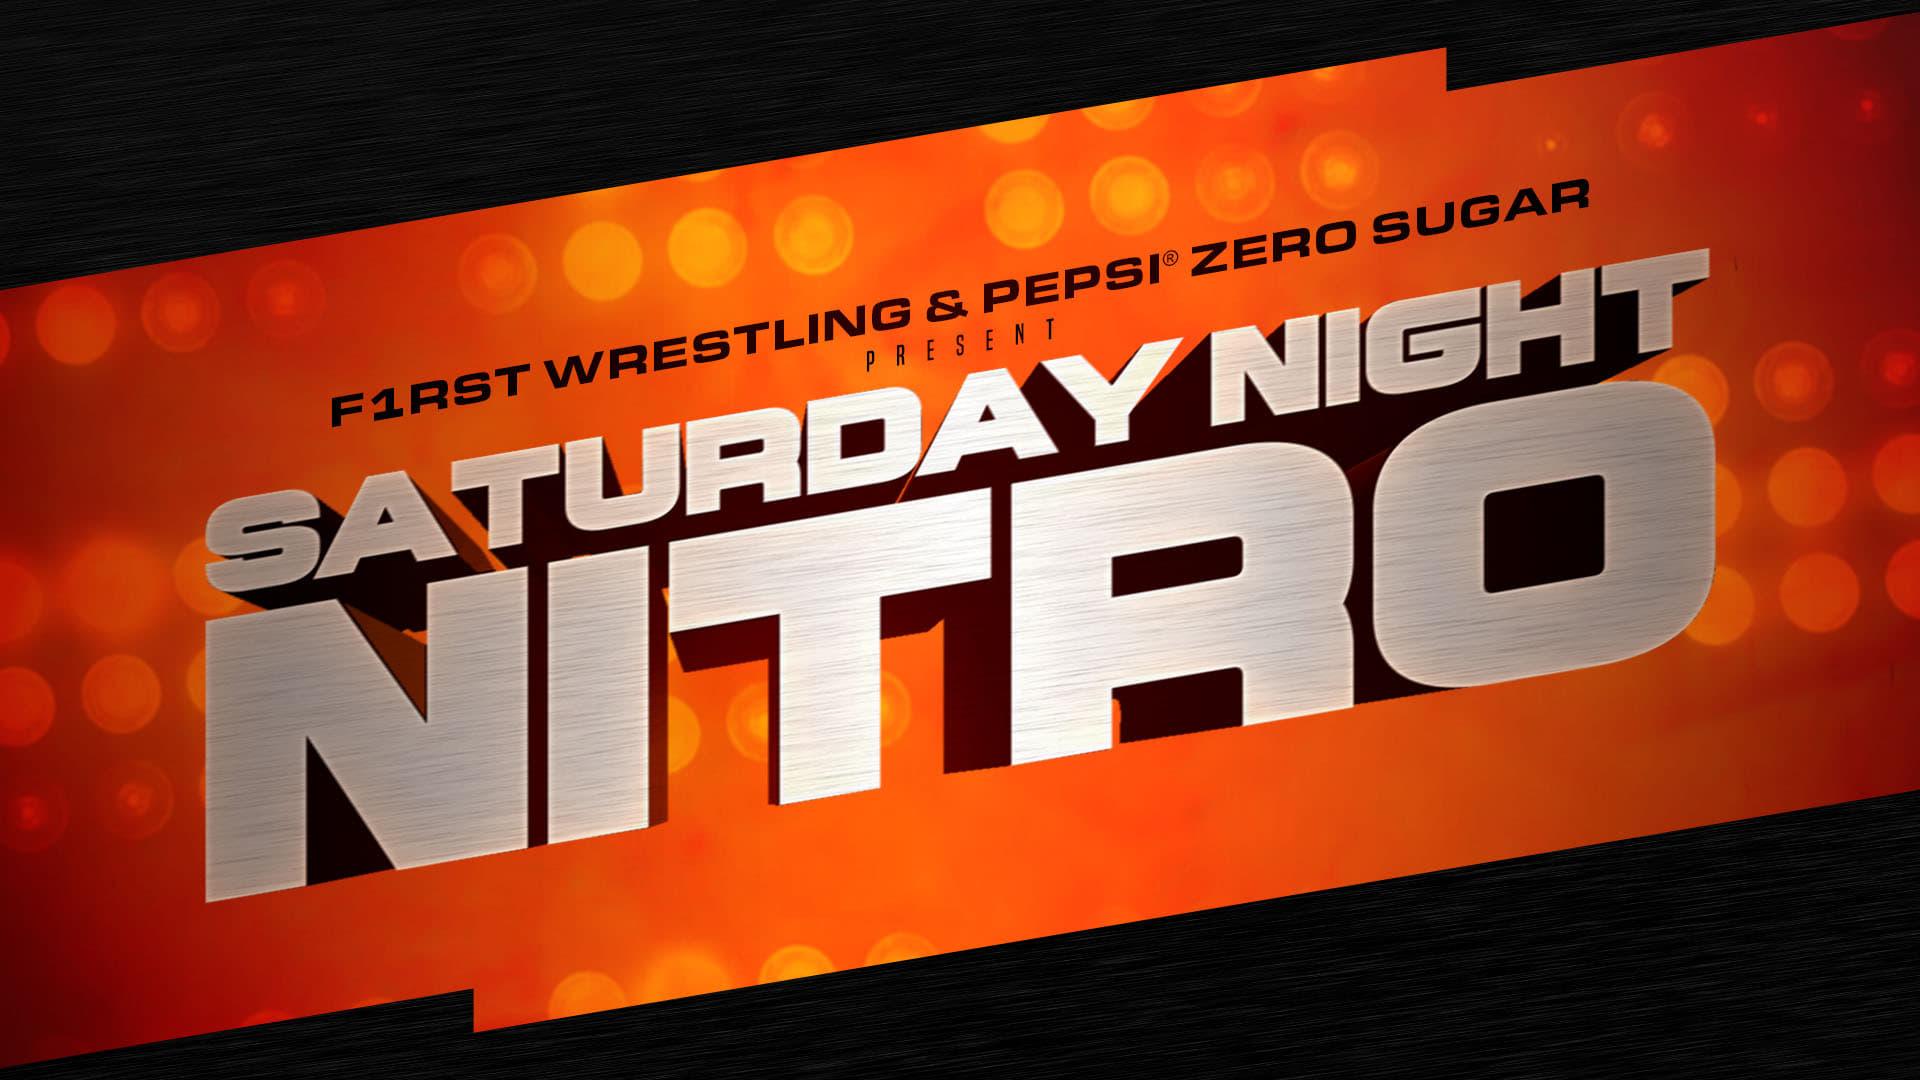 F1RST Wrestling Saturday Night Nitro backdrop